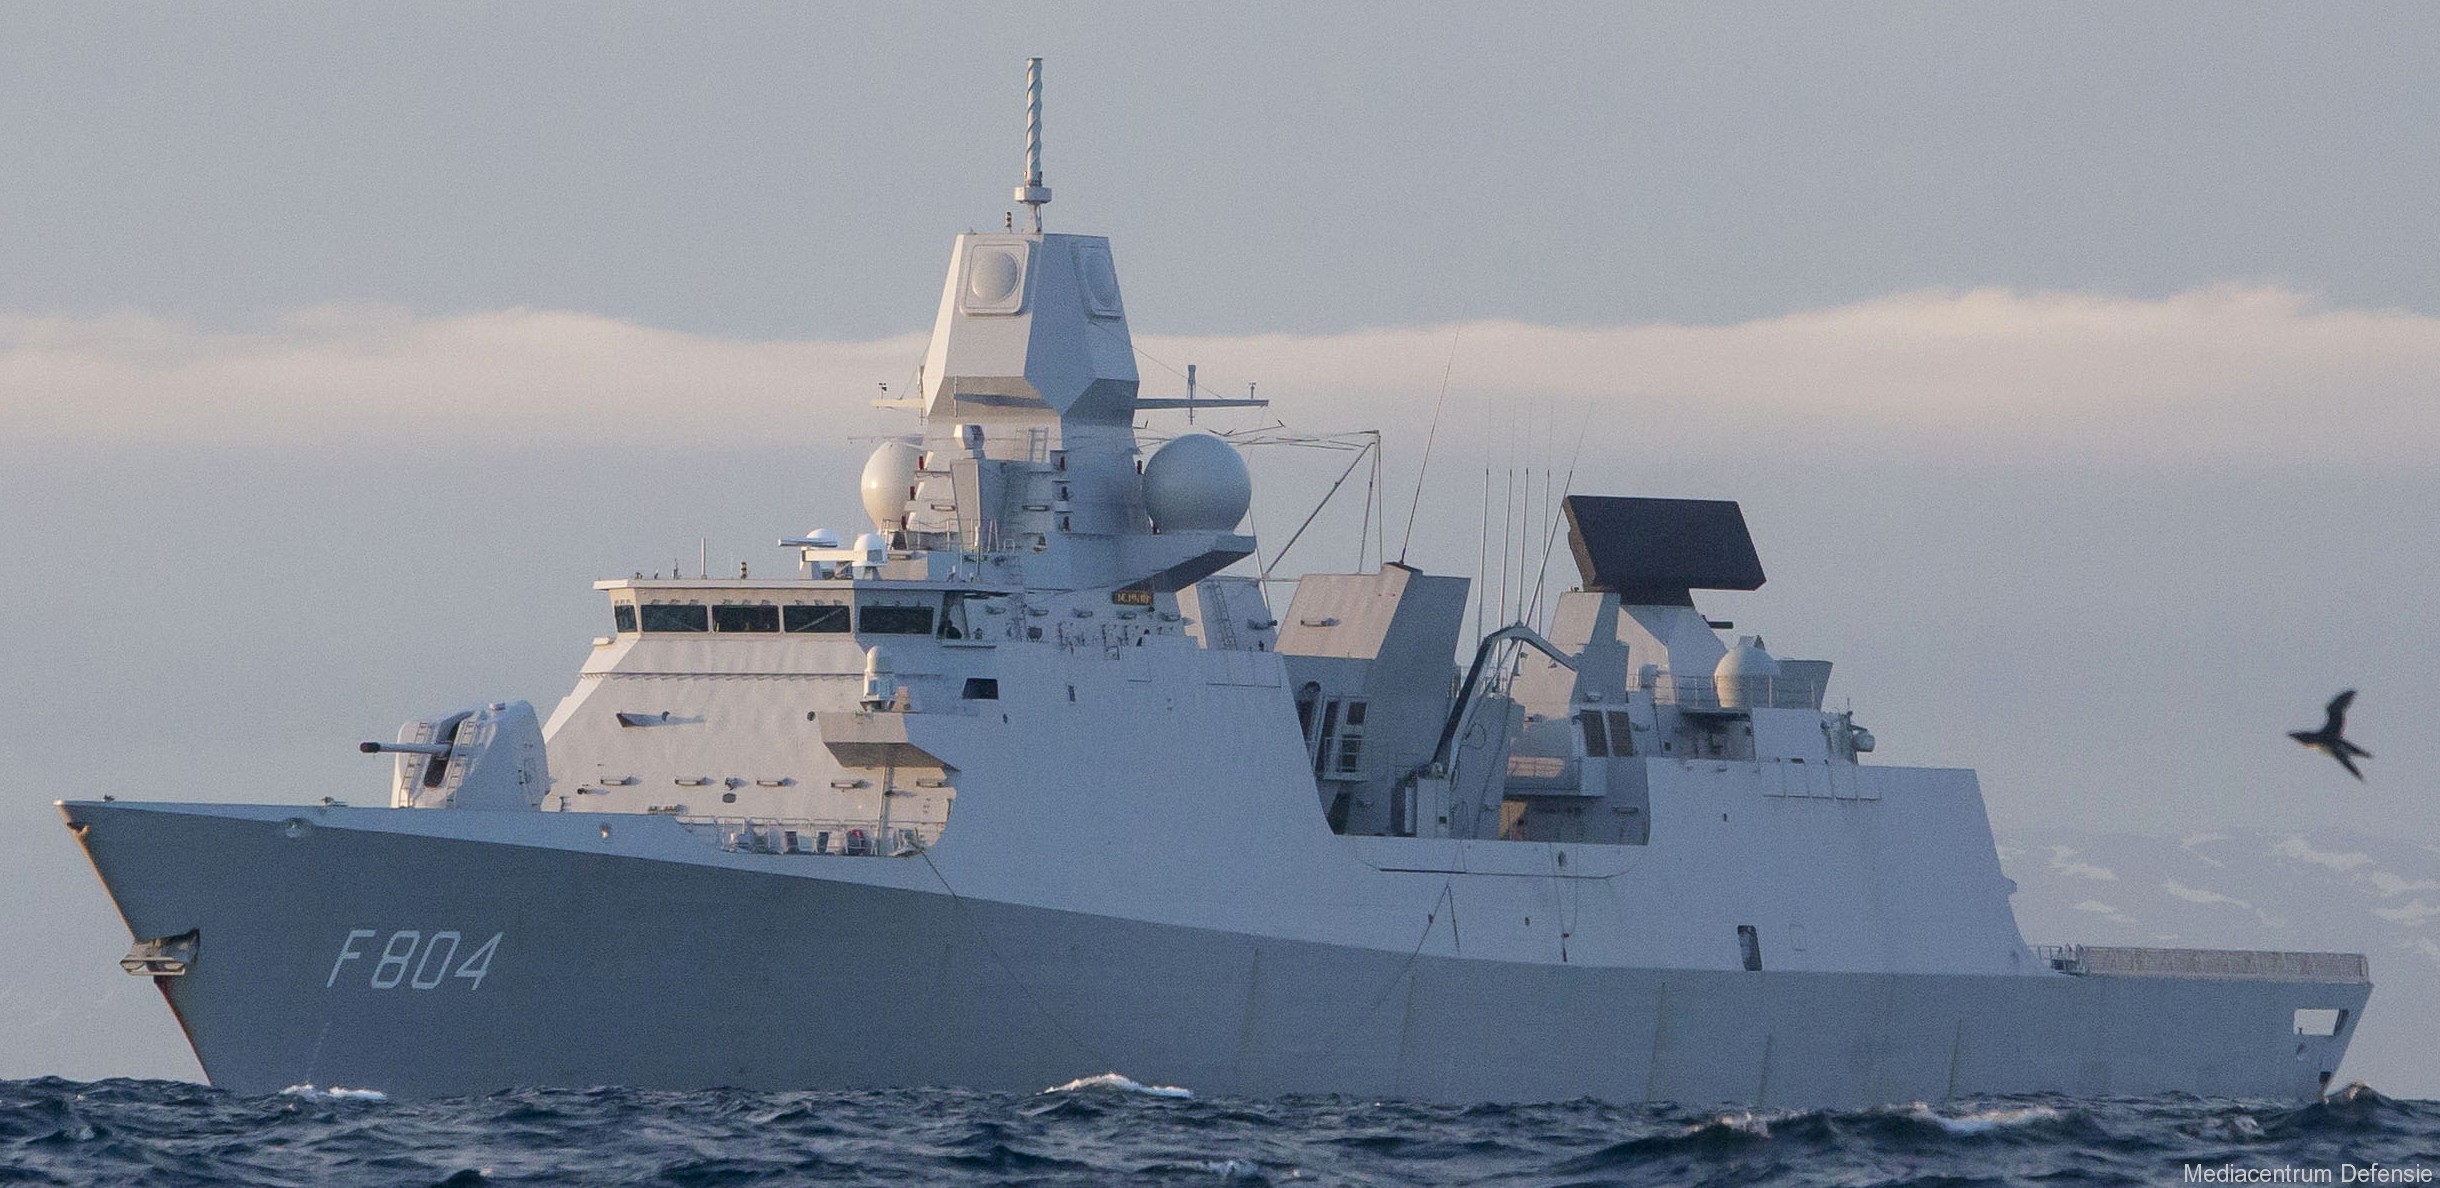 f-804 hnlms de ruyter guided missile frigate ffg lcf royal netherlands navy 10